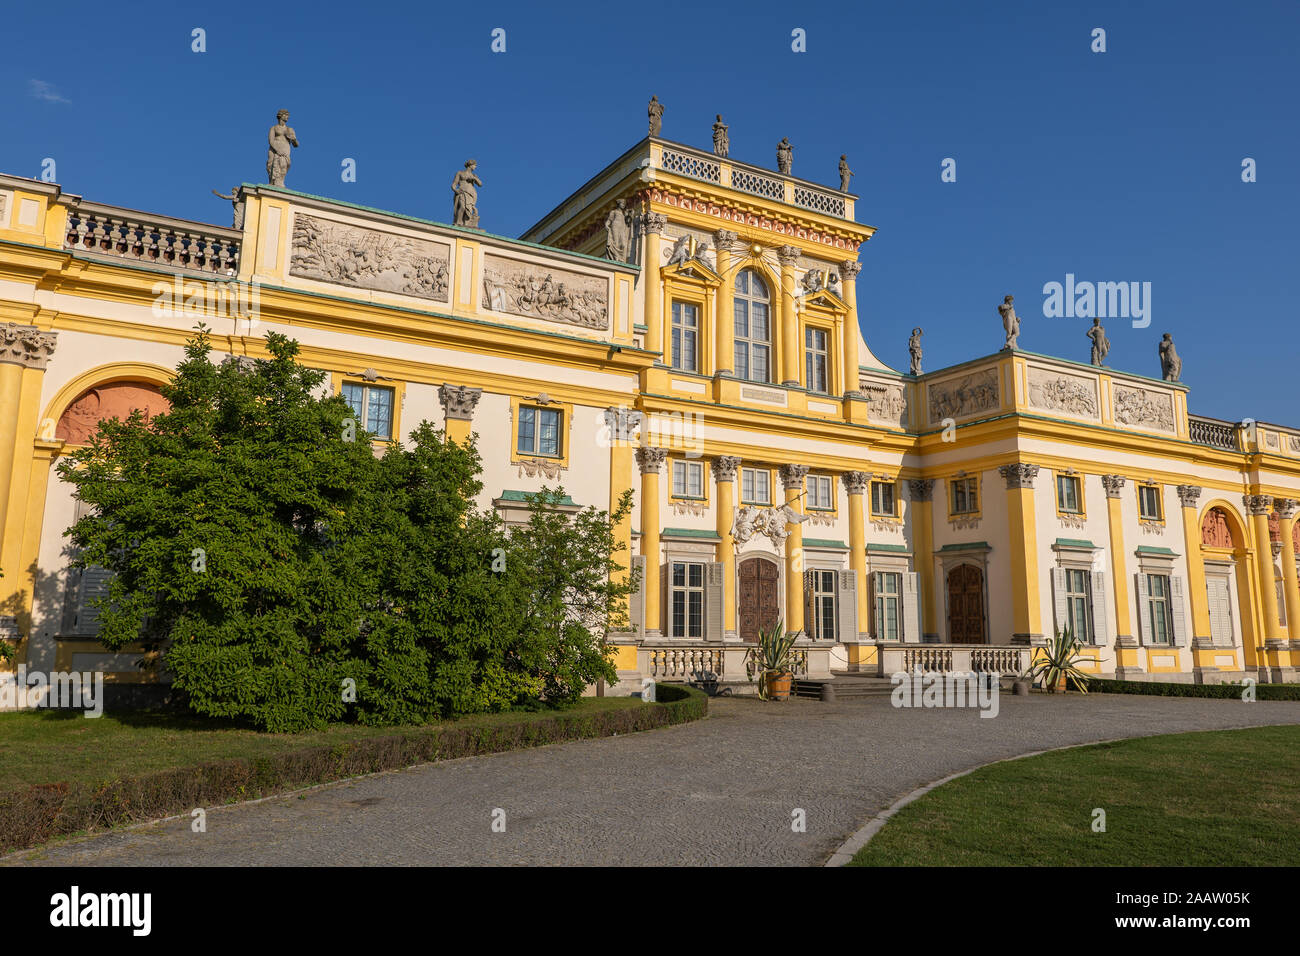 Wilanow Palace in Warsaw, Poland, Baroque style royal residence of King John III Sobieski, 17th century city landmark. Stock Photo